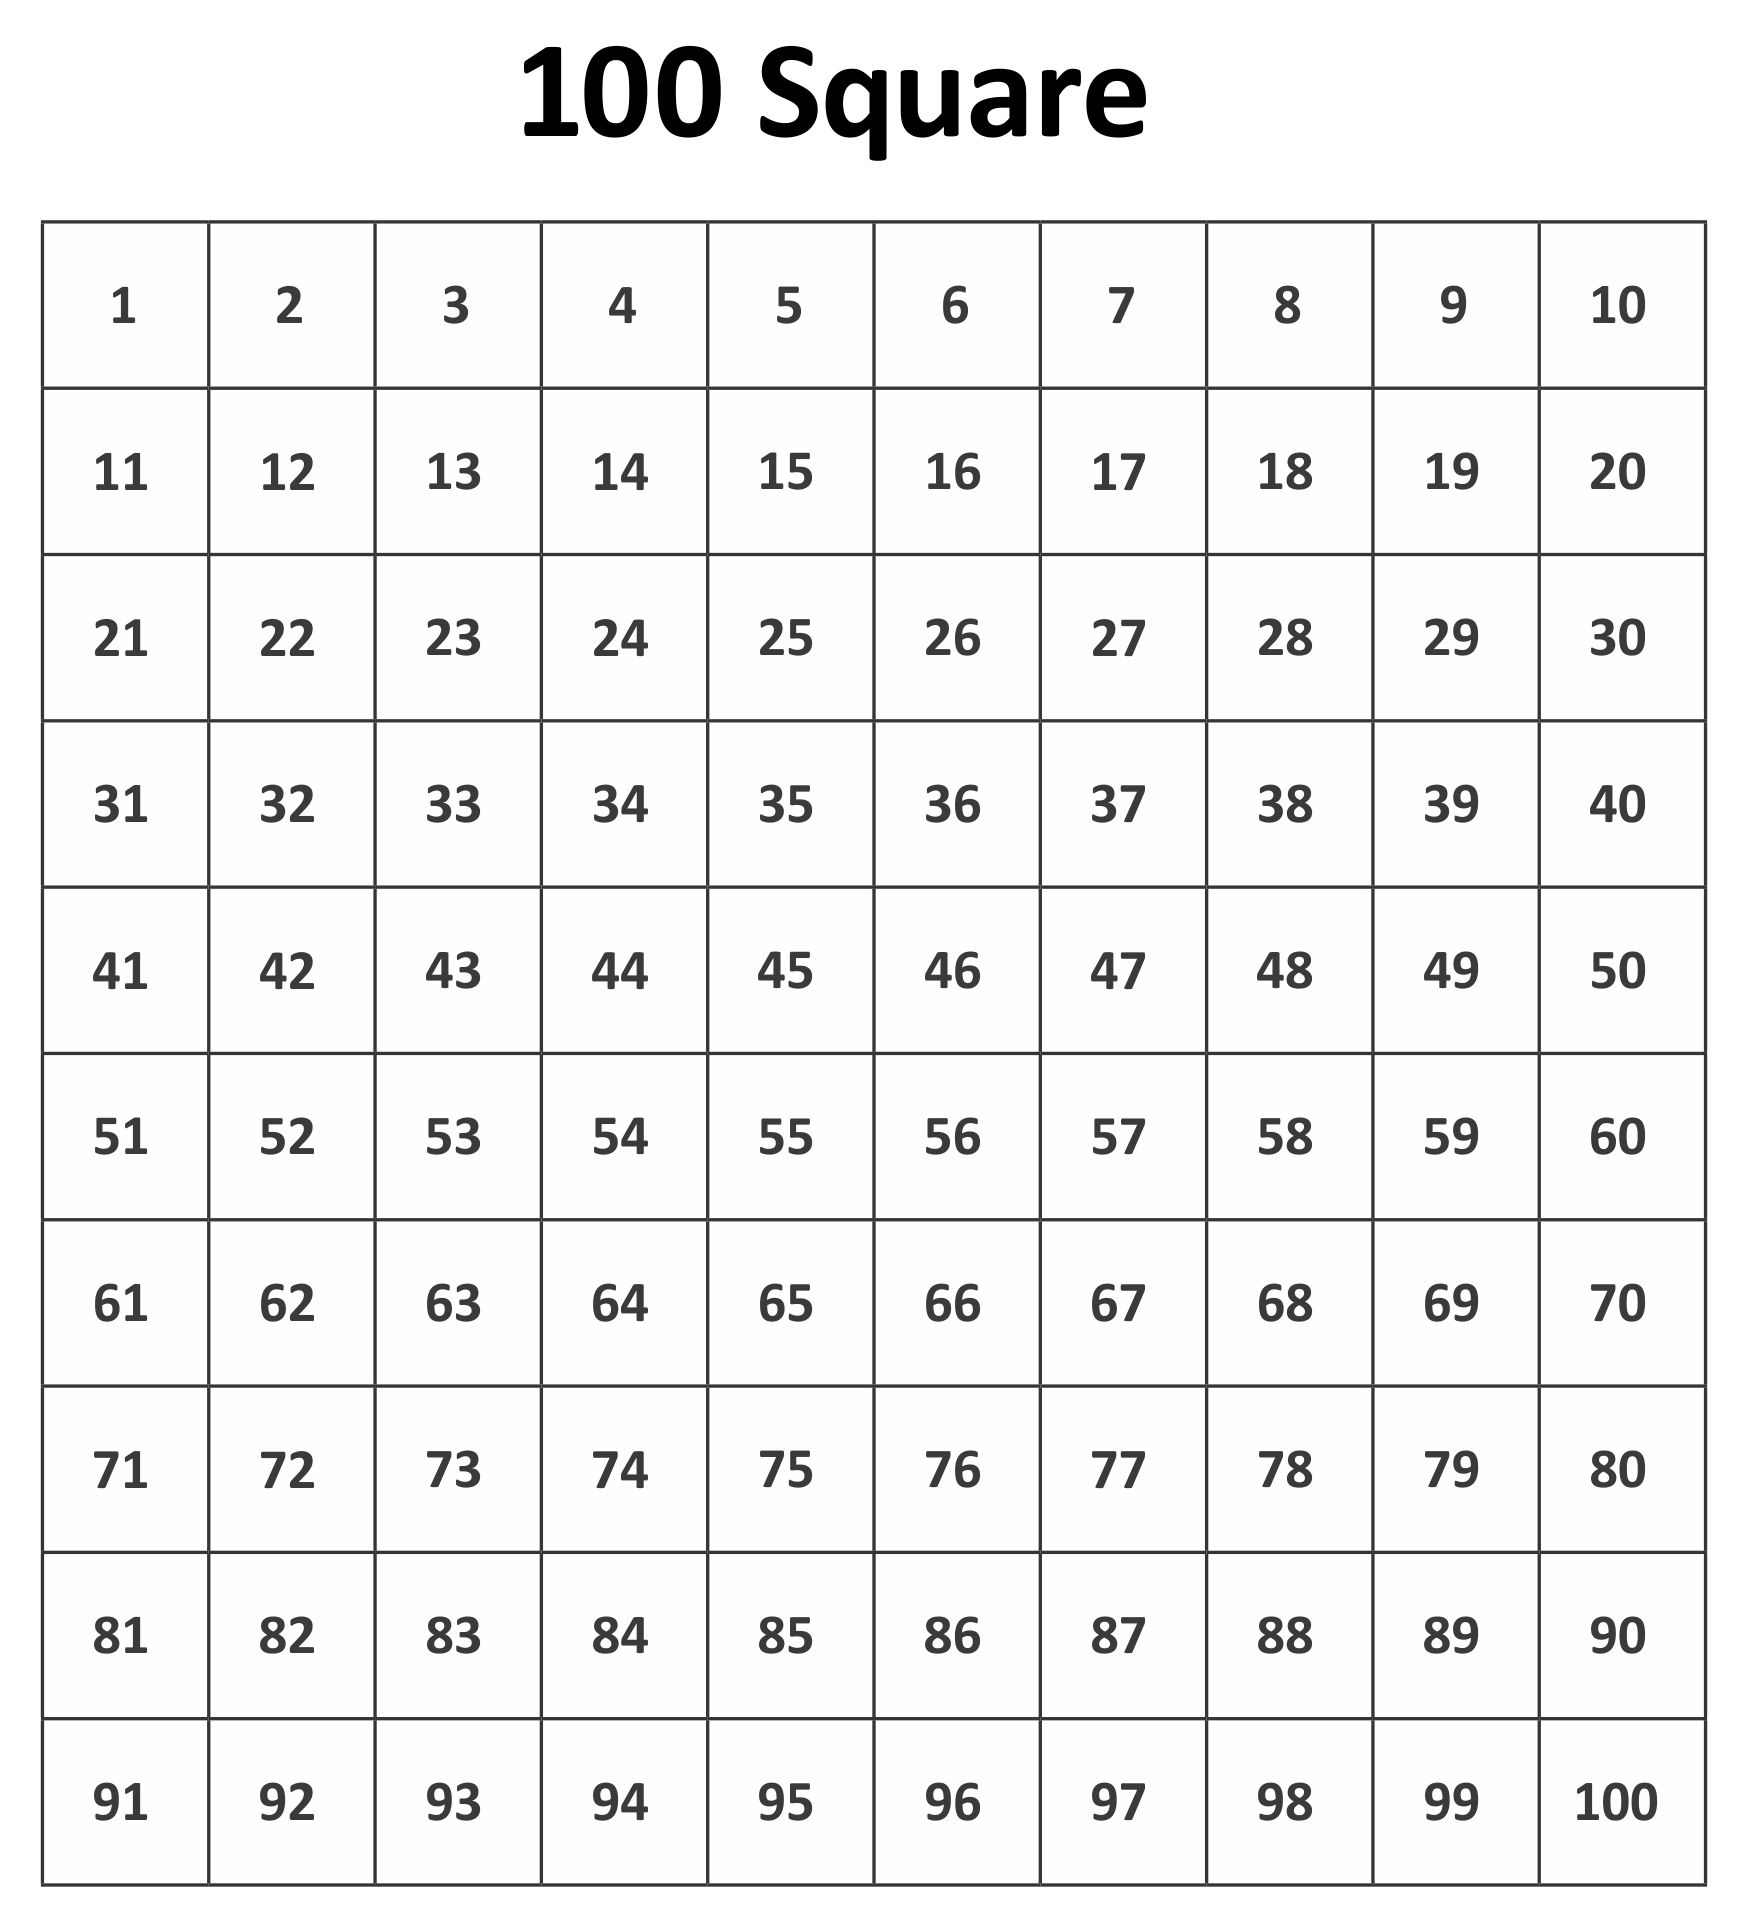 printable-100-square-grid-printable-jd